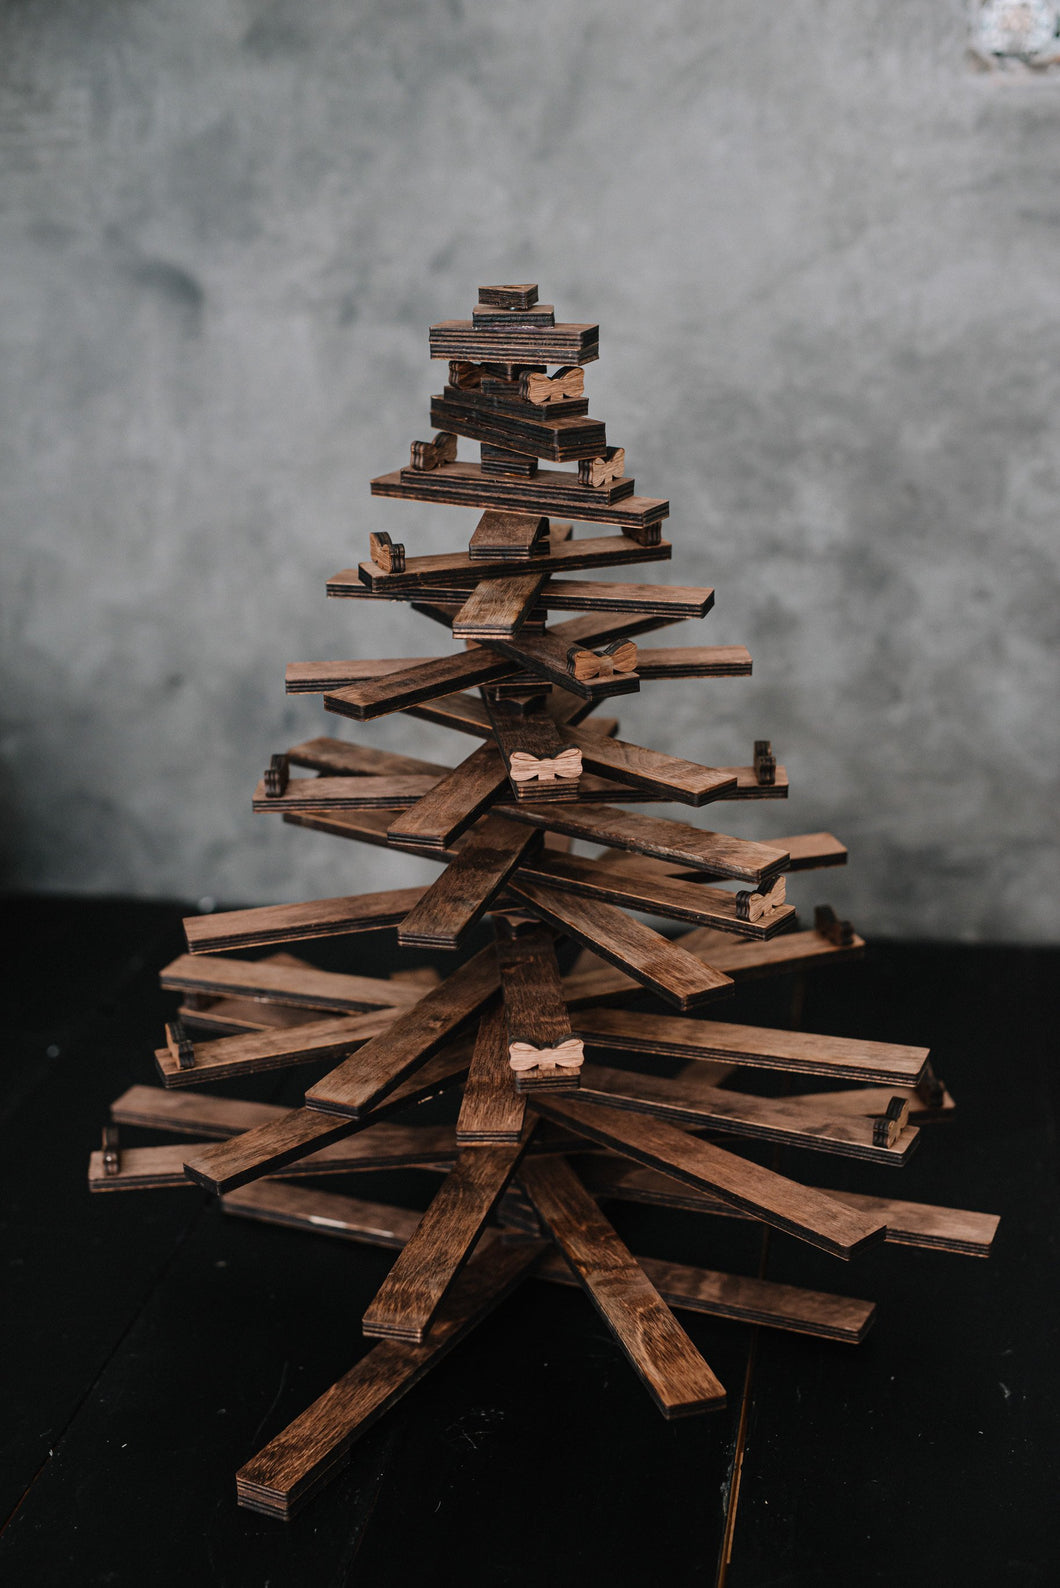 Wooden Christmas tree - wood ladder christmas tree